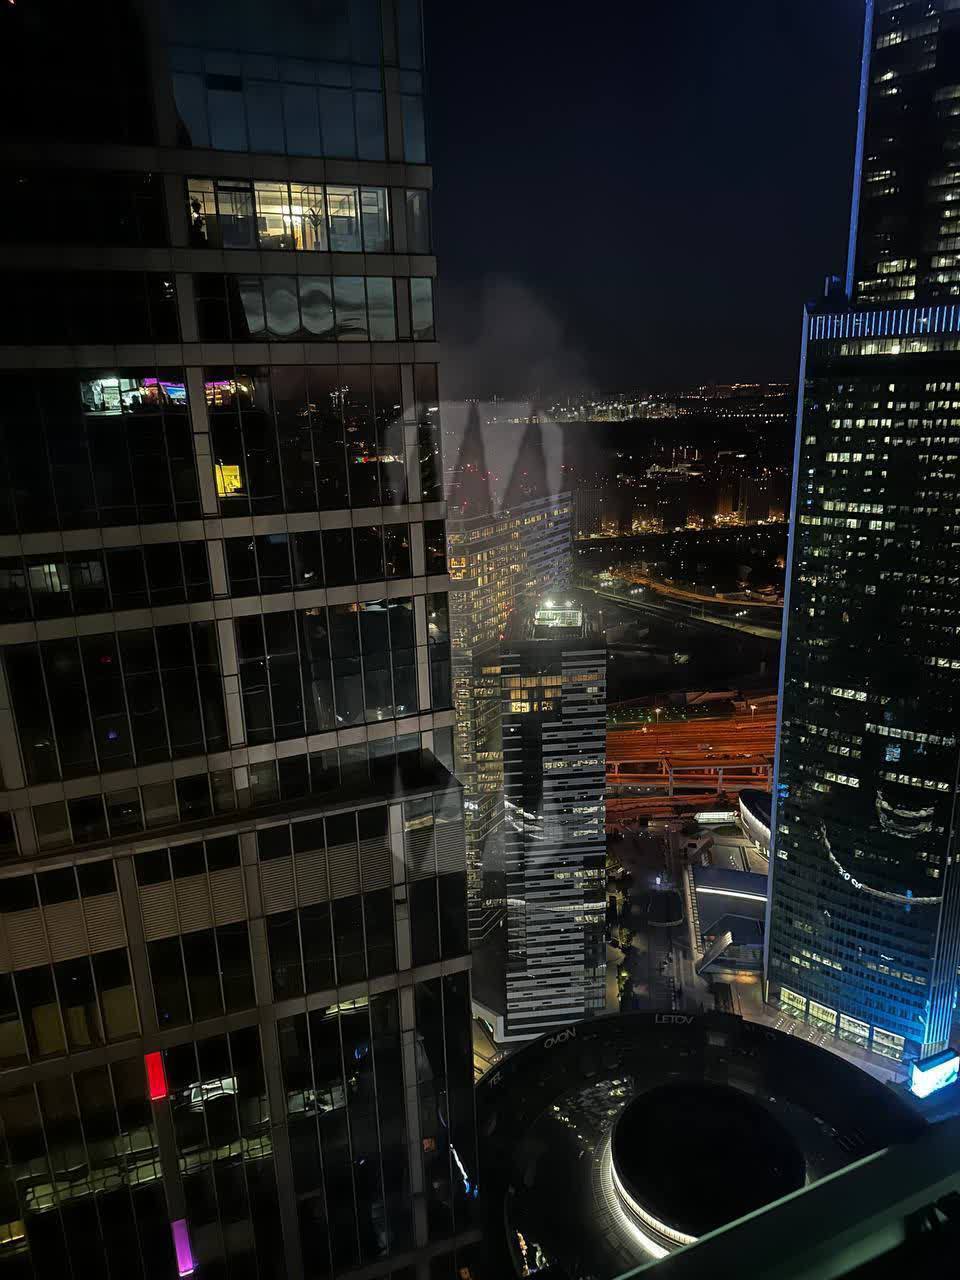 В столице РФ снова пожаловались на атаку БПЛА: из башни "Москва-Сити" валил дым. Фото и видео